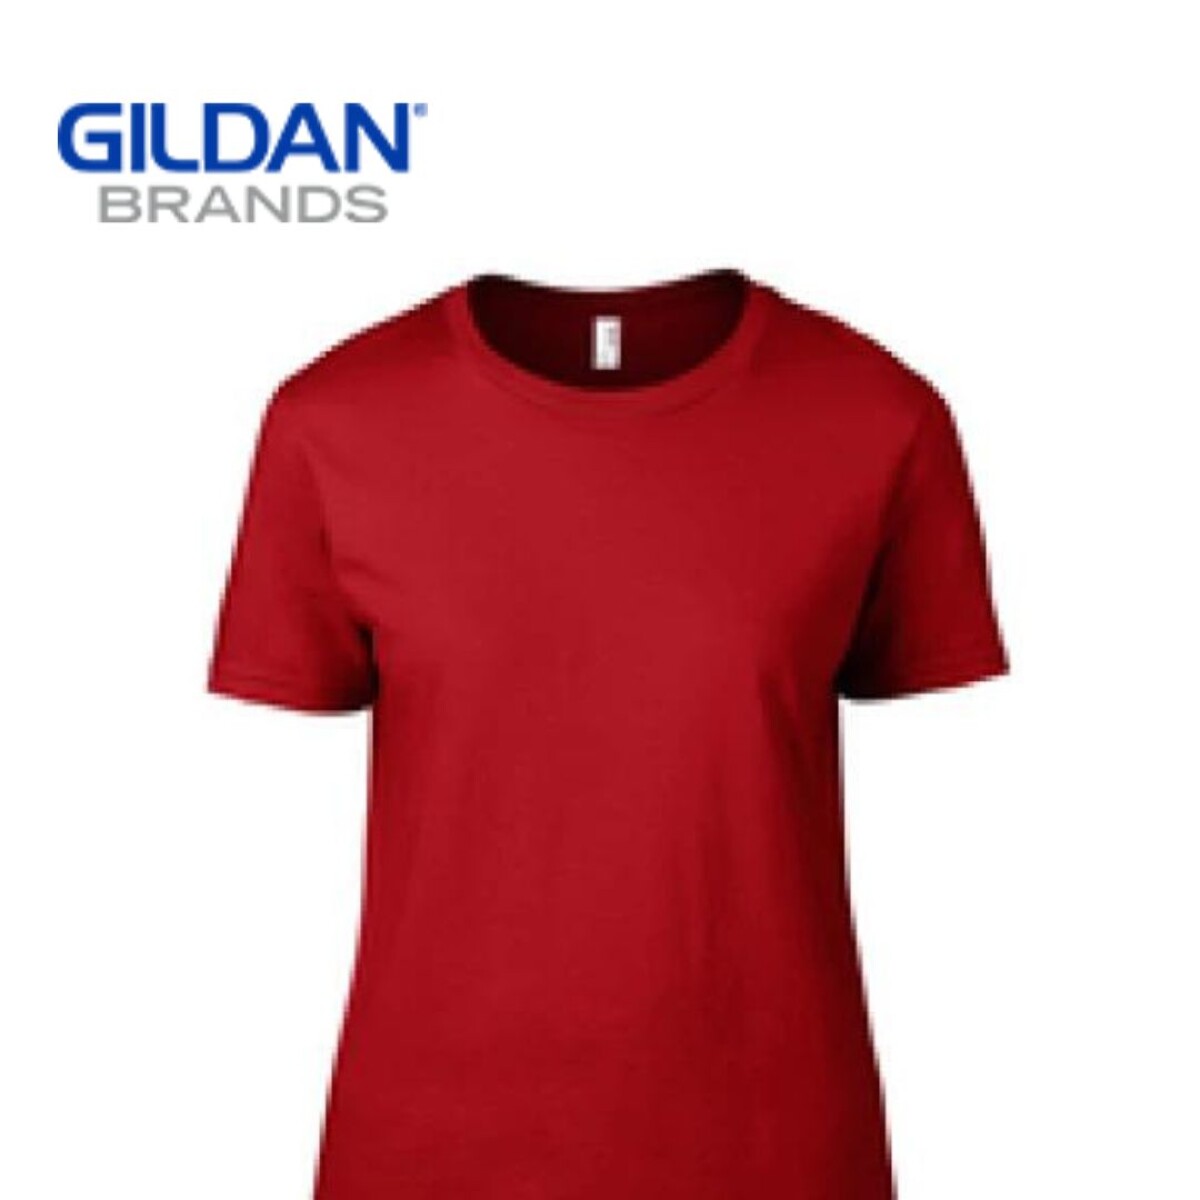 Camiseta Gildan Básica - Rojo 